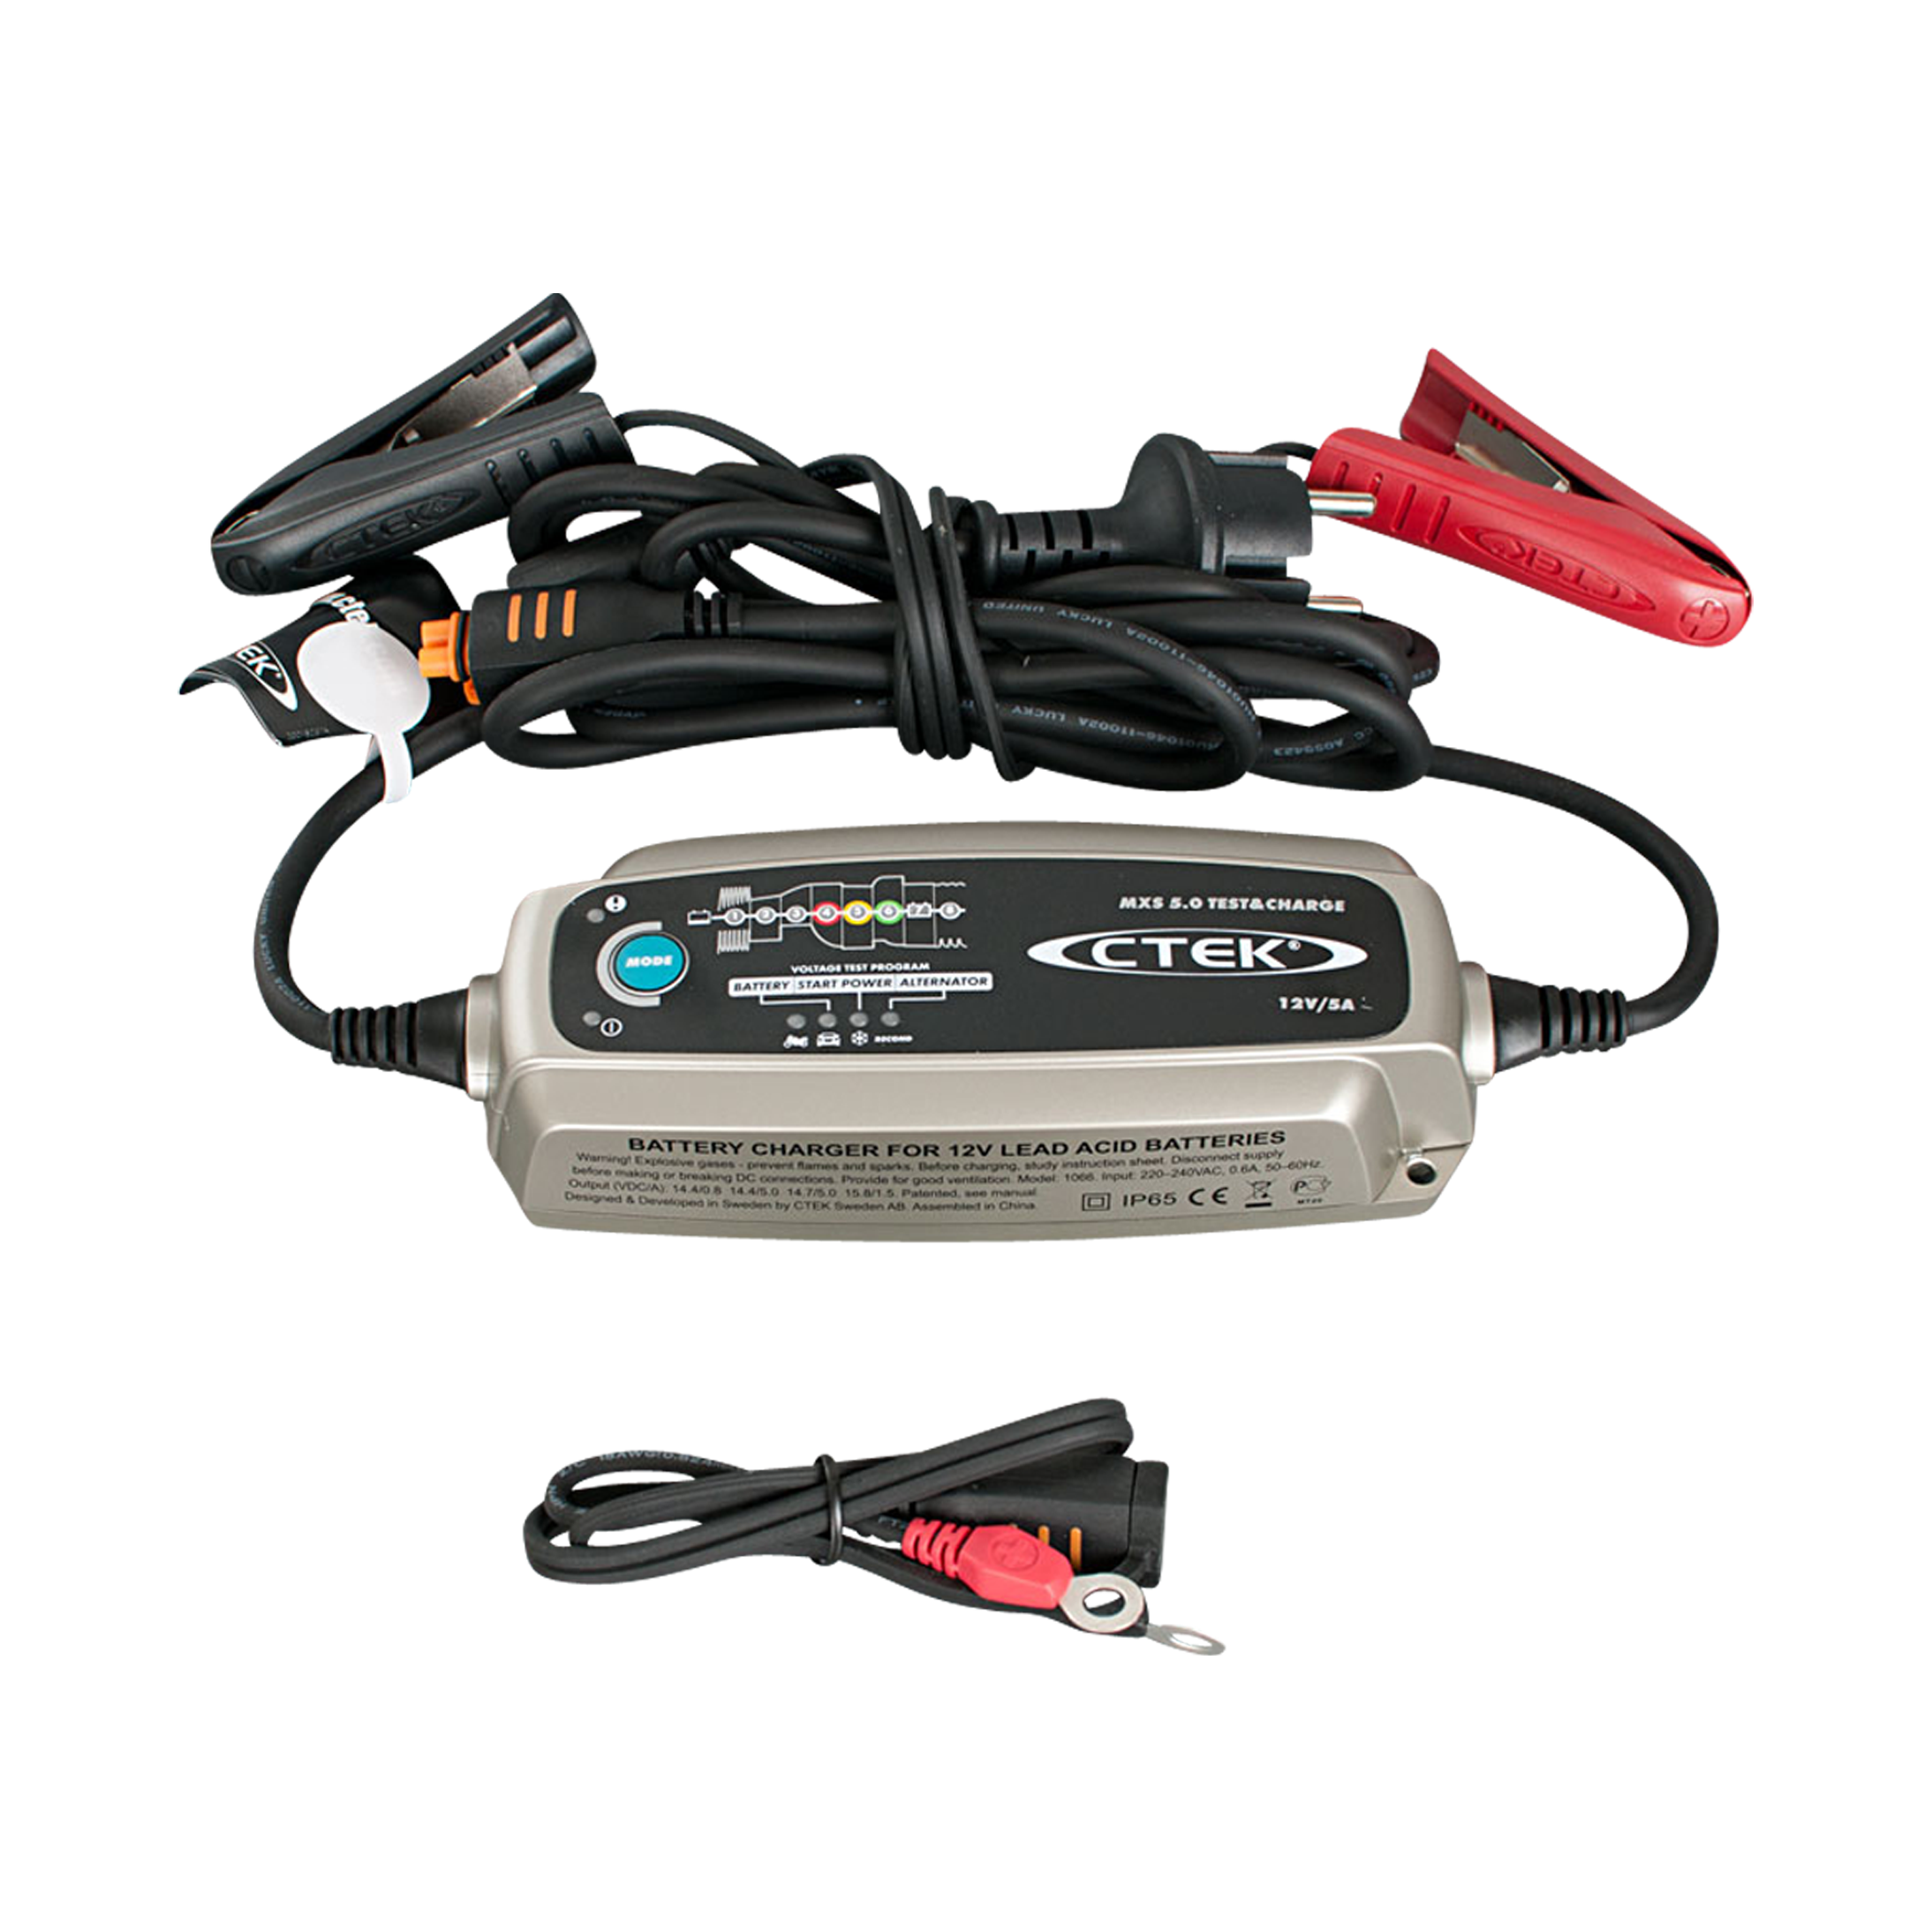 Ctek Batterieladegerät MXS 5.0 Canton Thurgovie 